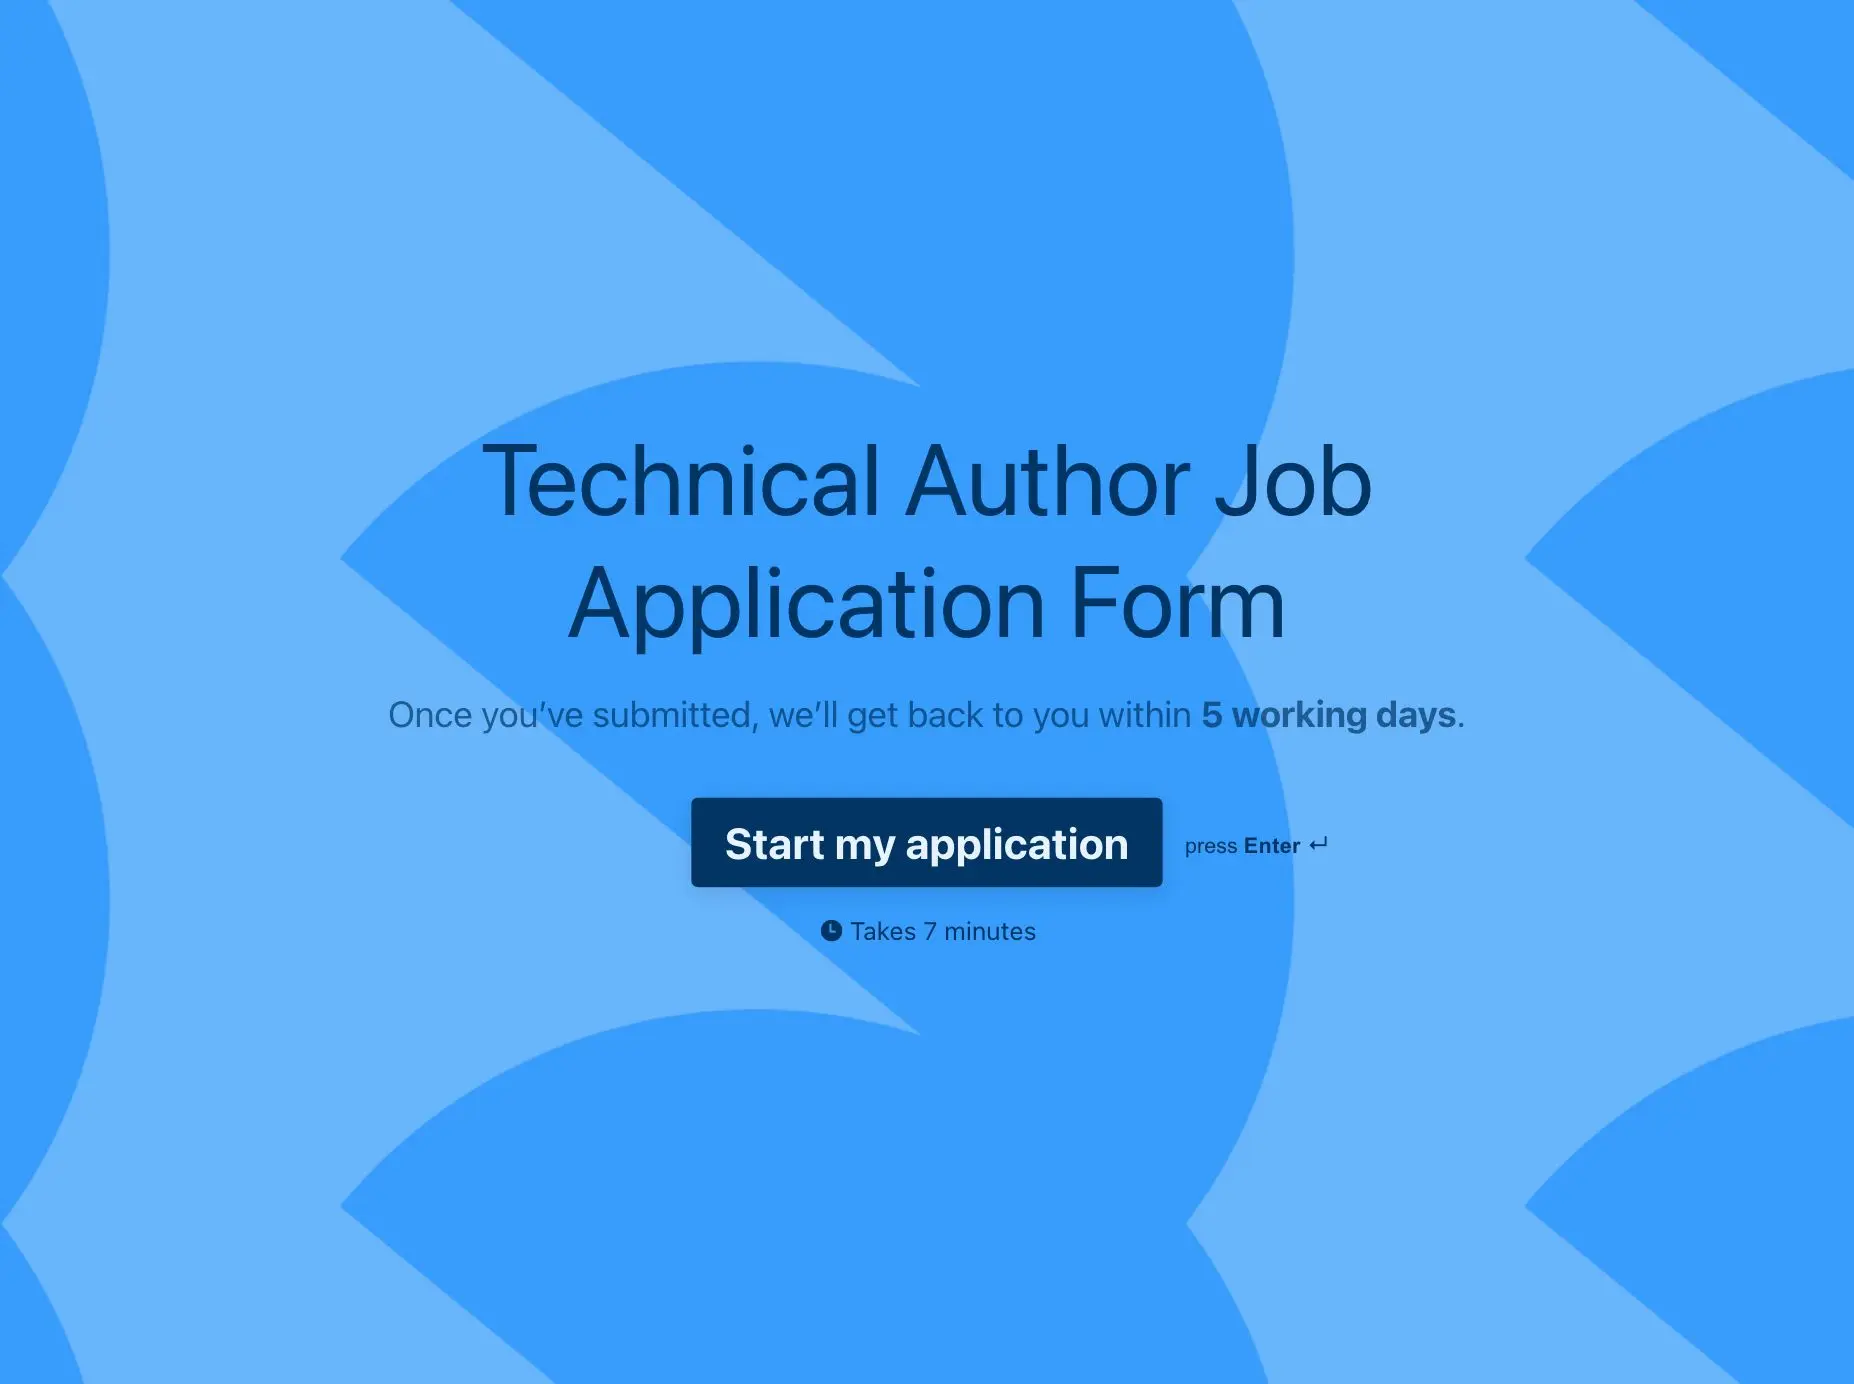 Technical Author Job Application Form Template Hero